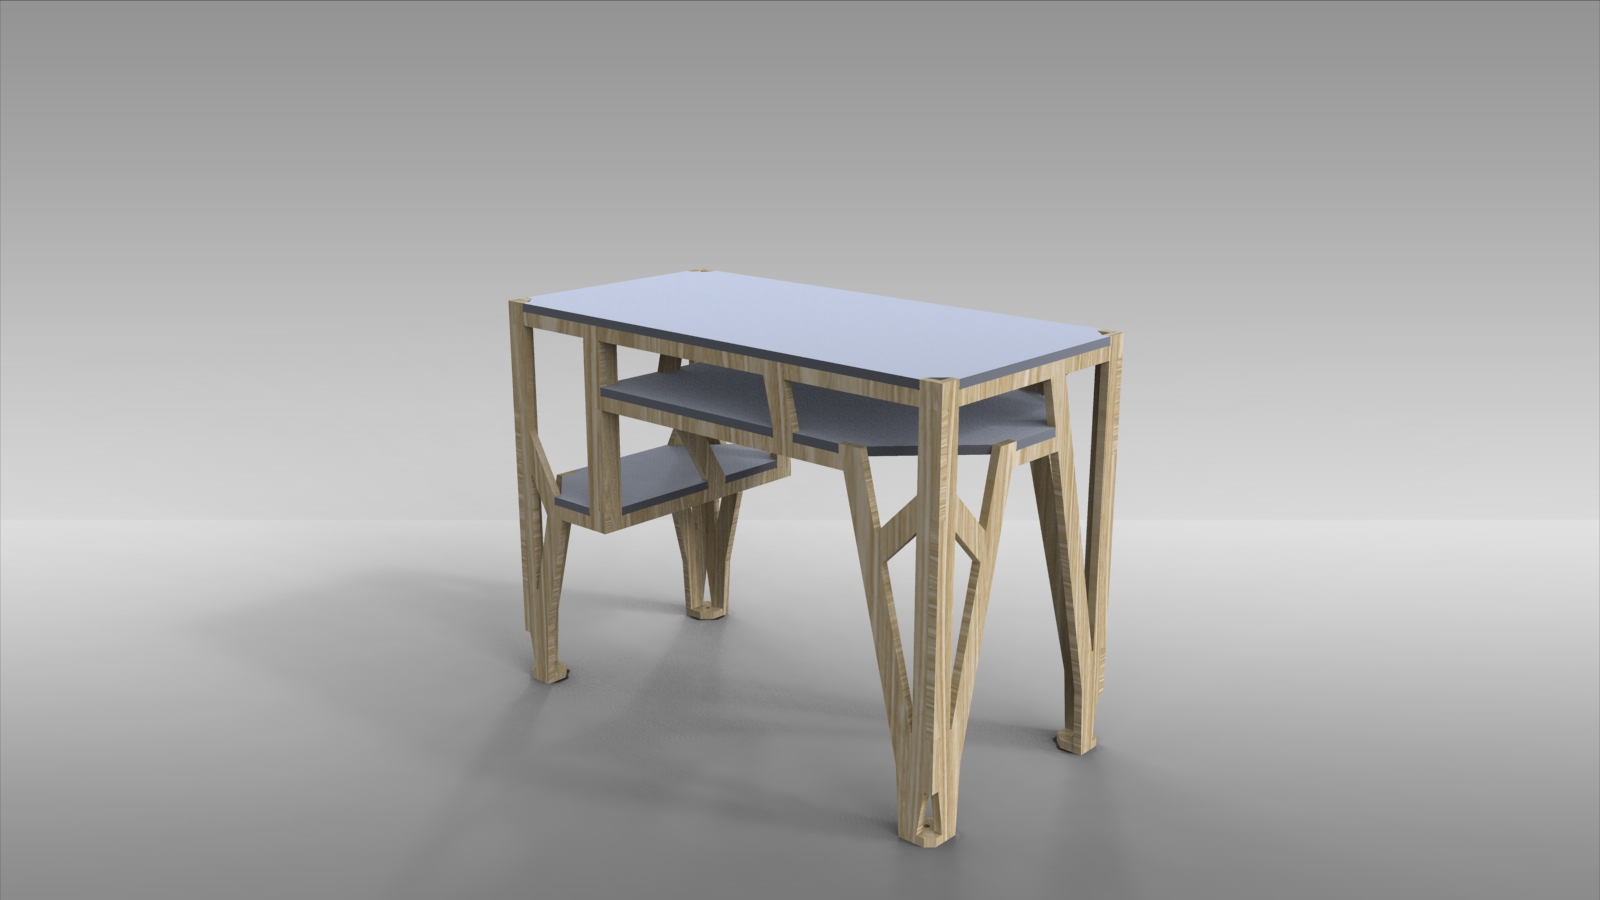 Download Cnc furniture plywood Plans DIY plans for a 